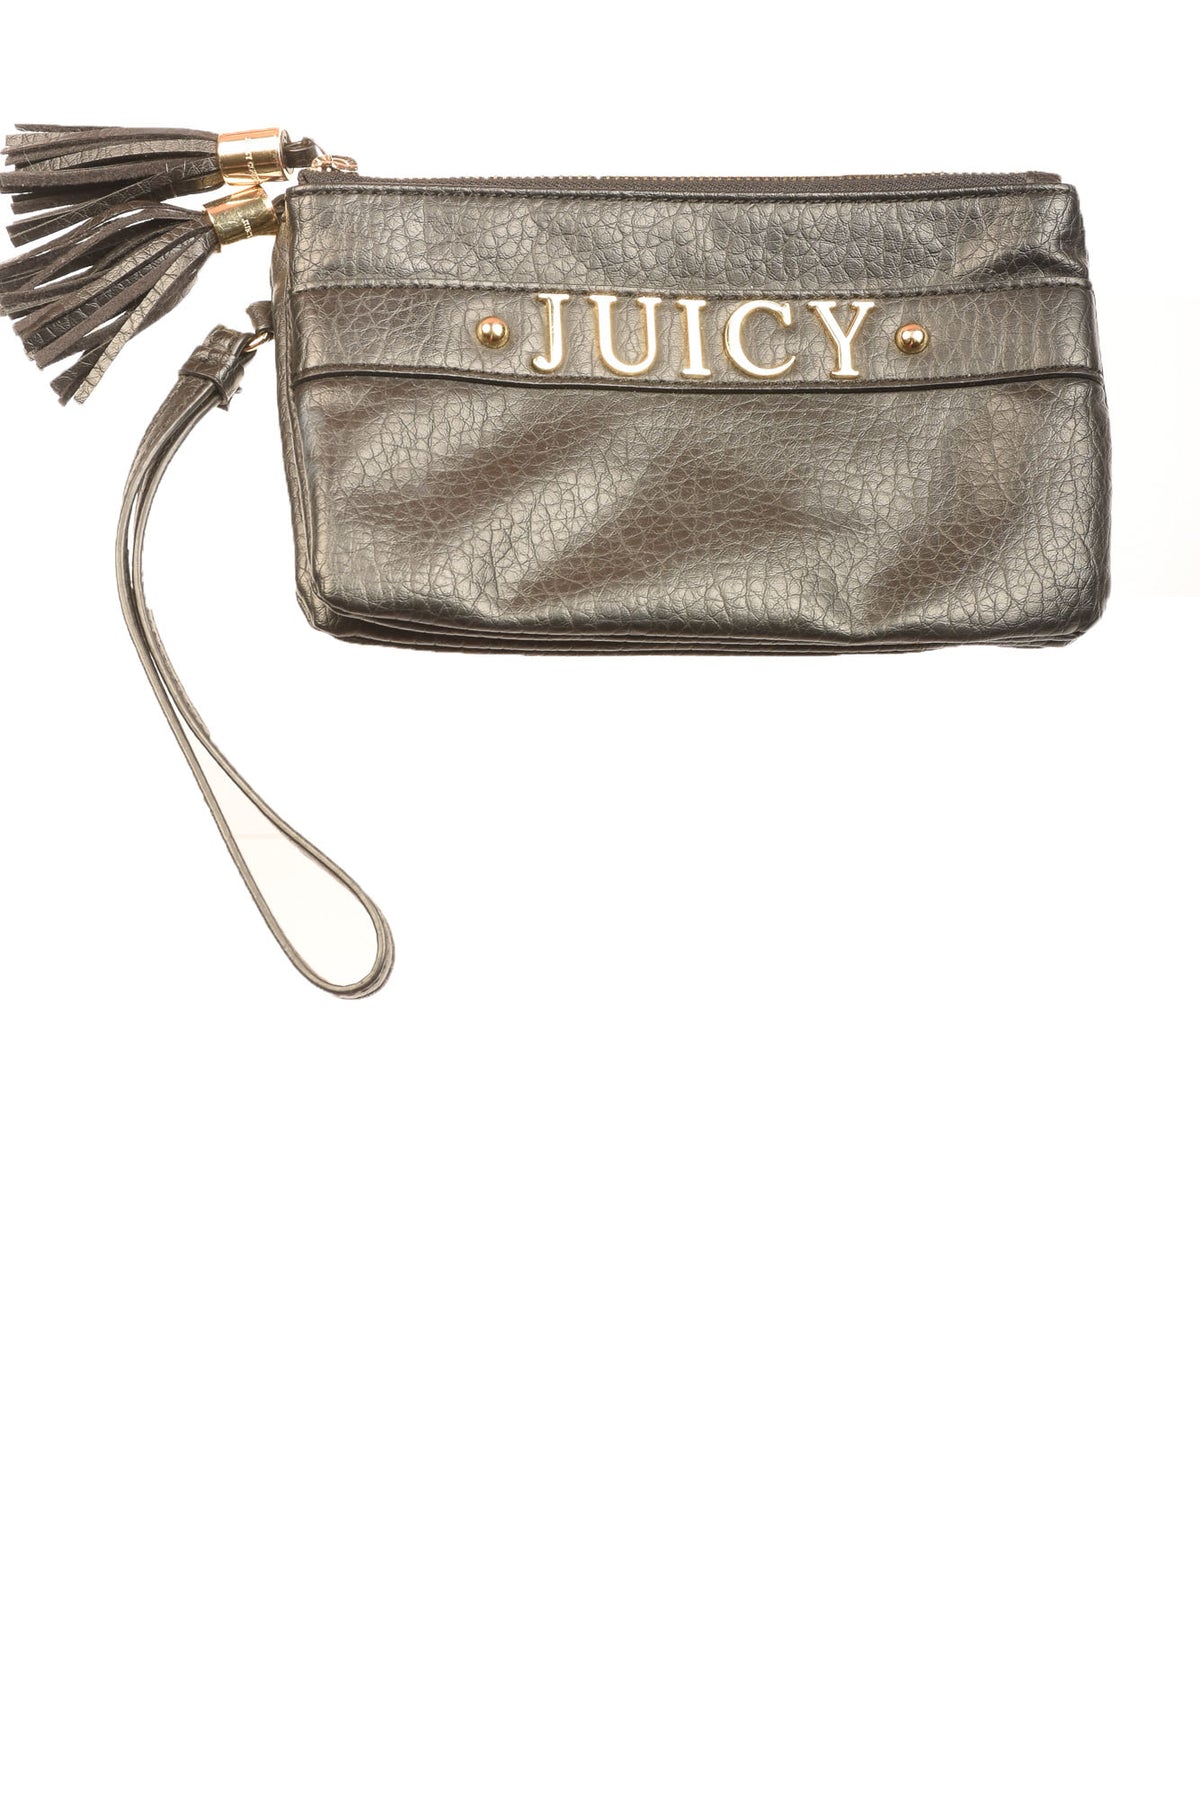 Juicy Couture Women&#39;s Wristlet